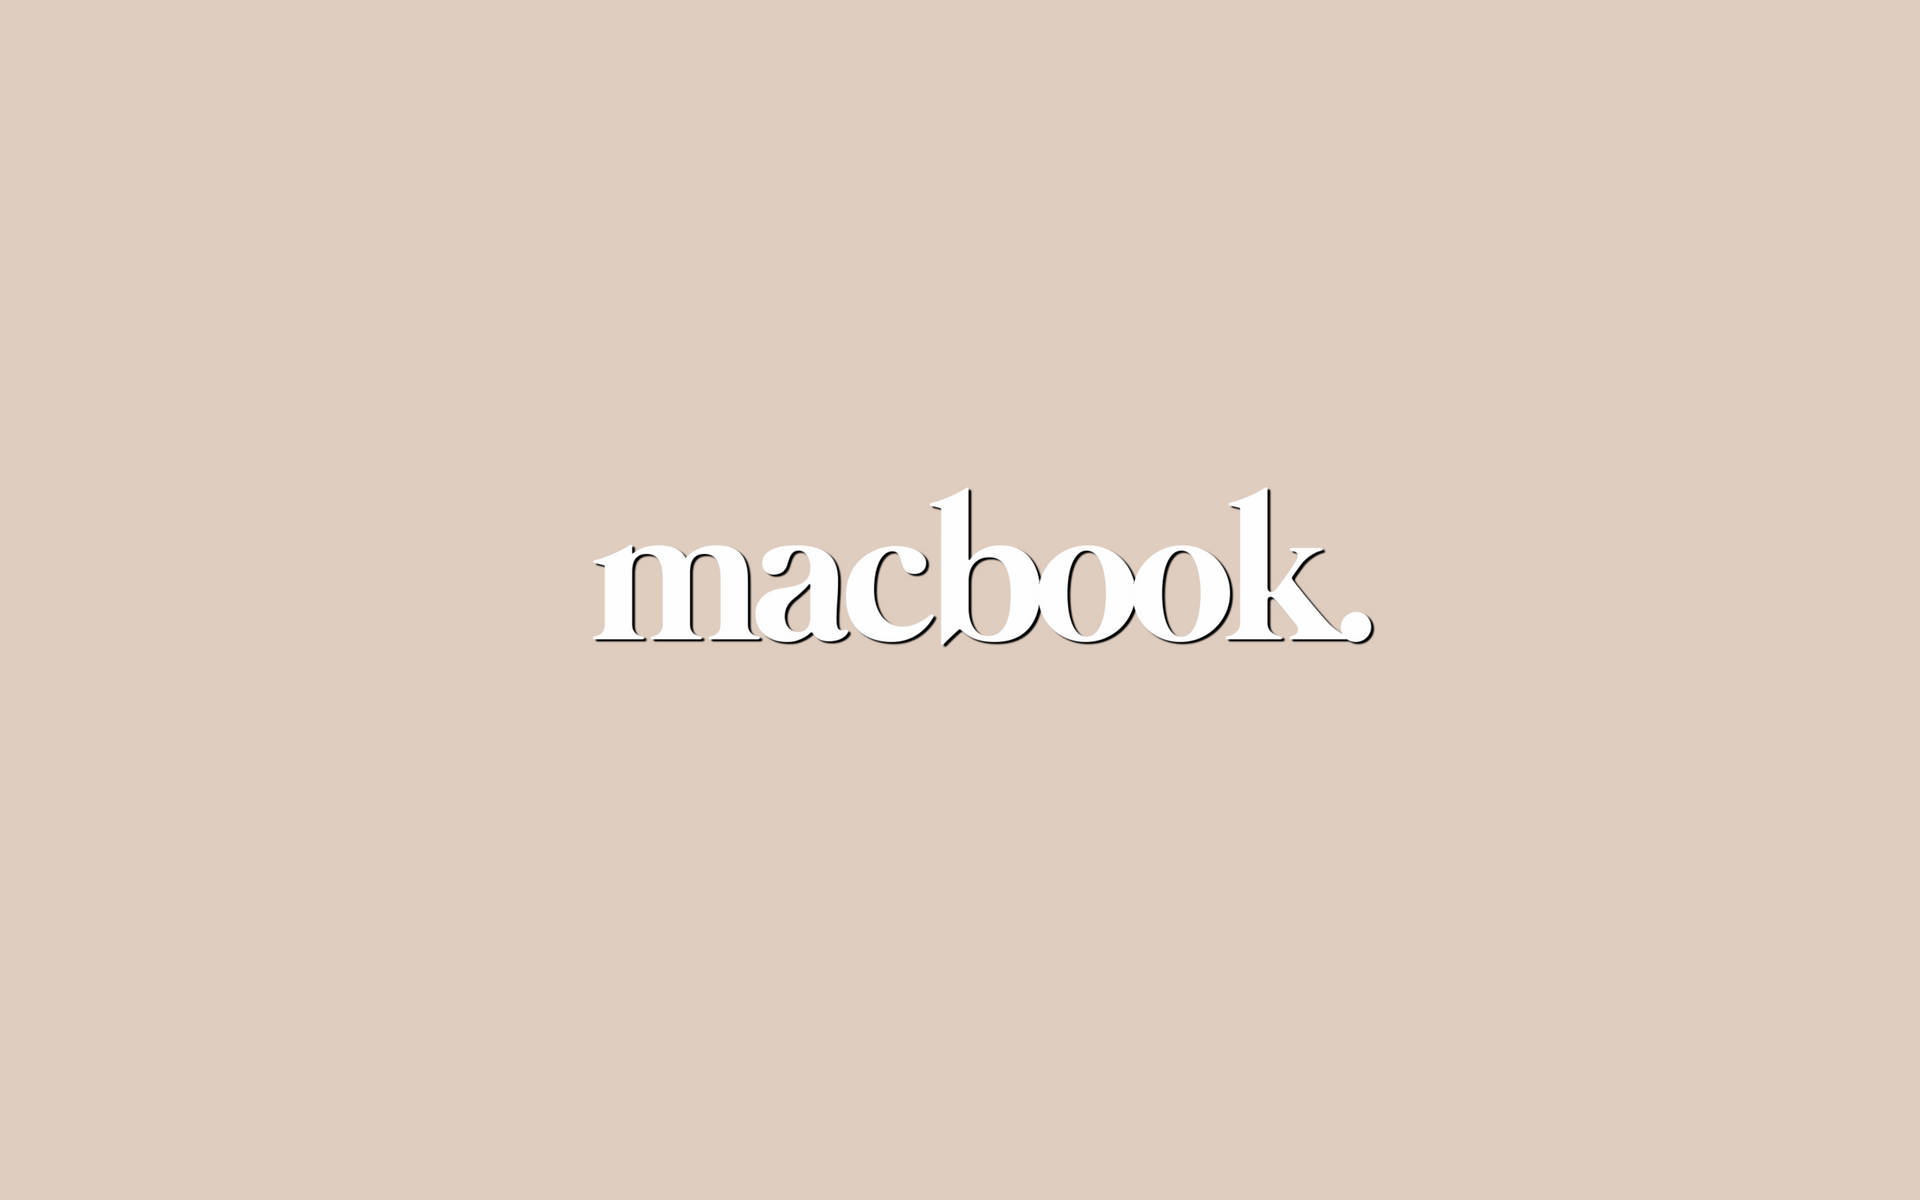 Macbook Minimal Aesthetic Desktop Background